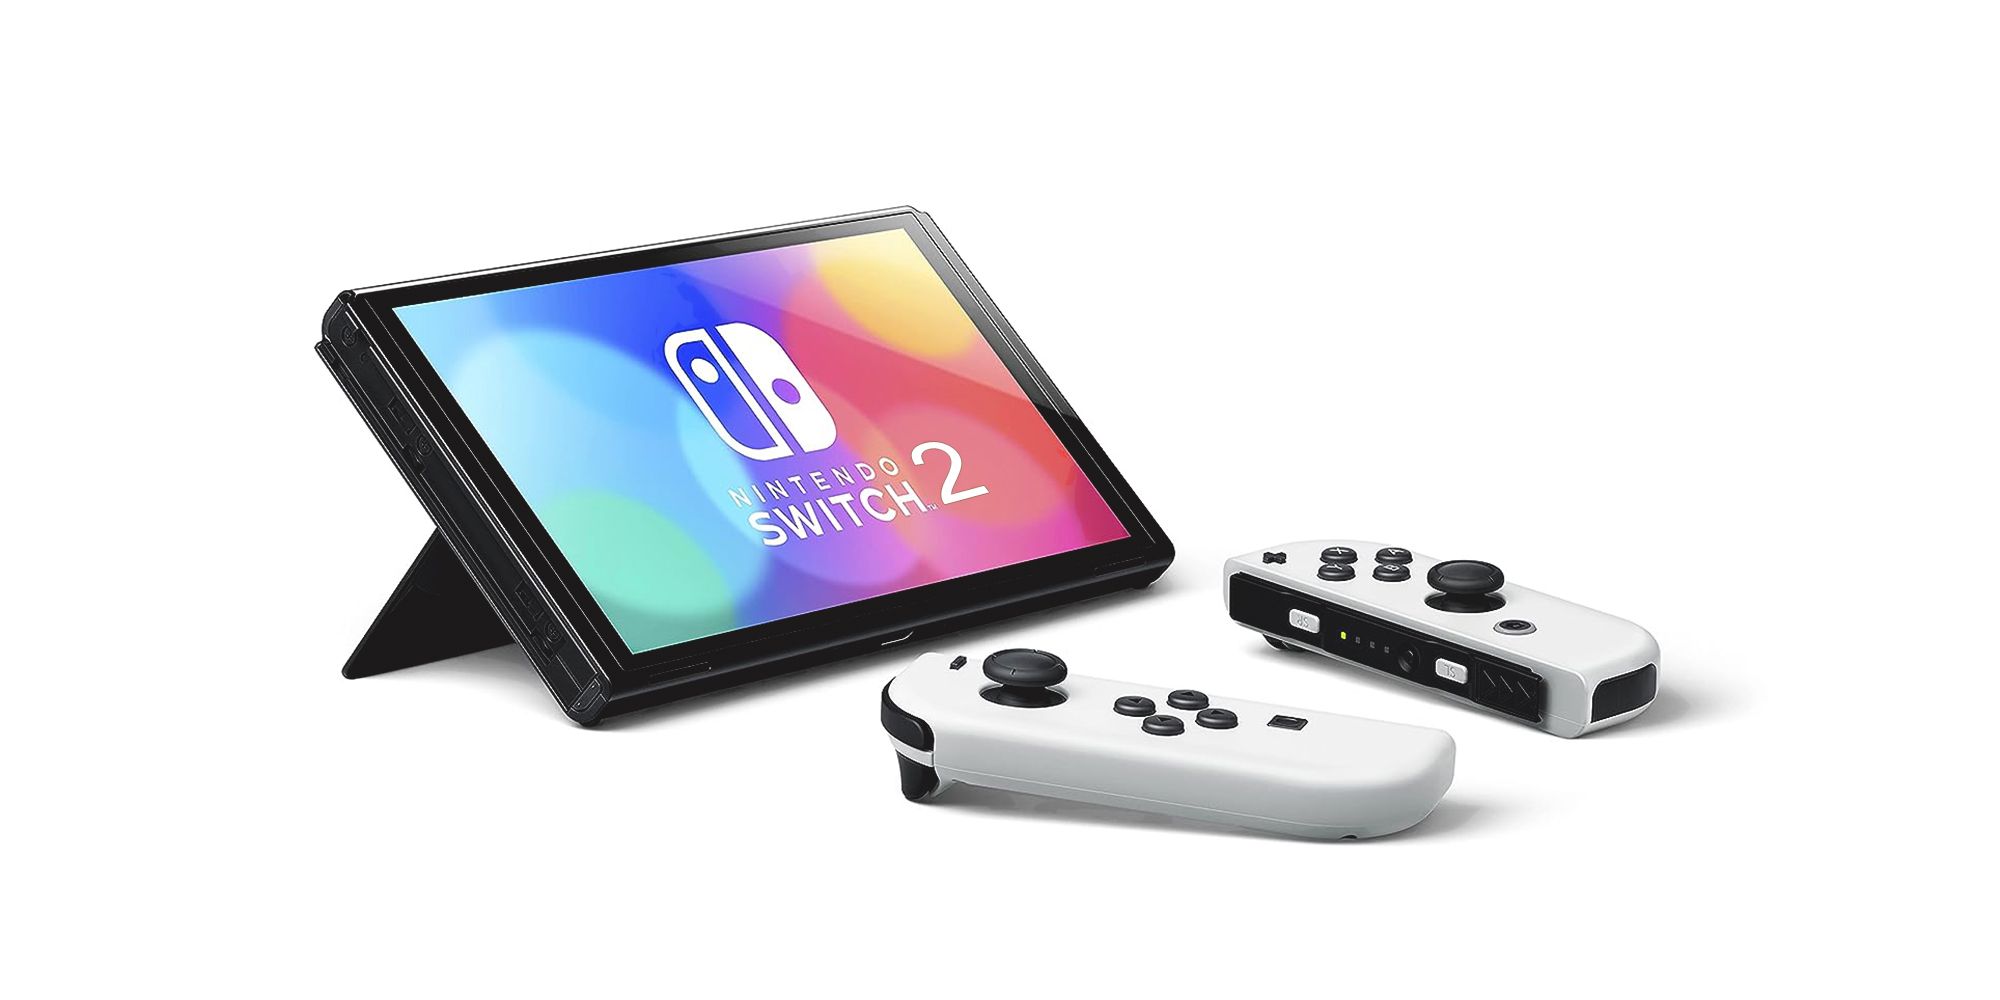 Nintendo Switch 2 OLED model with detached Joy-Cons mockup